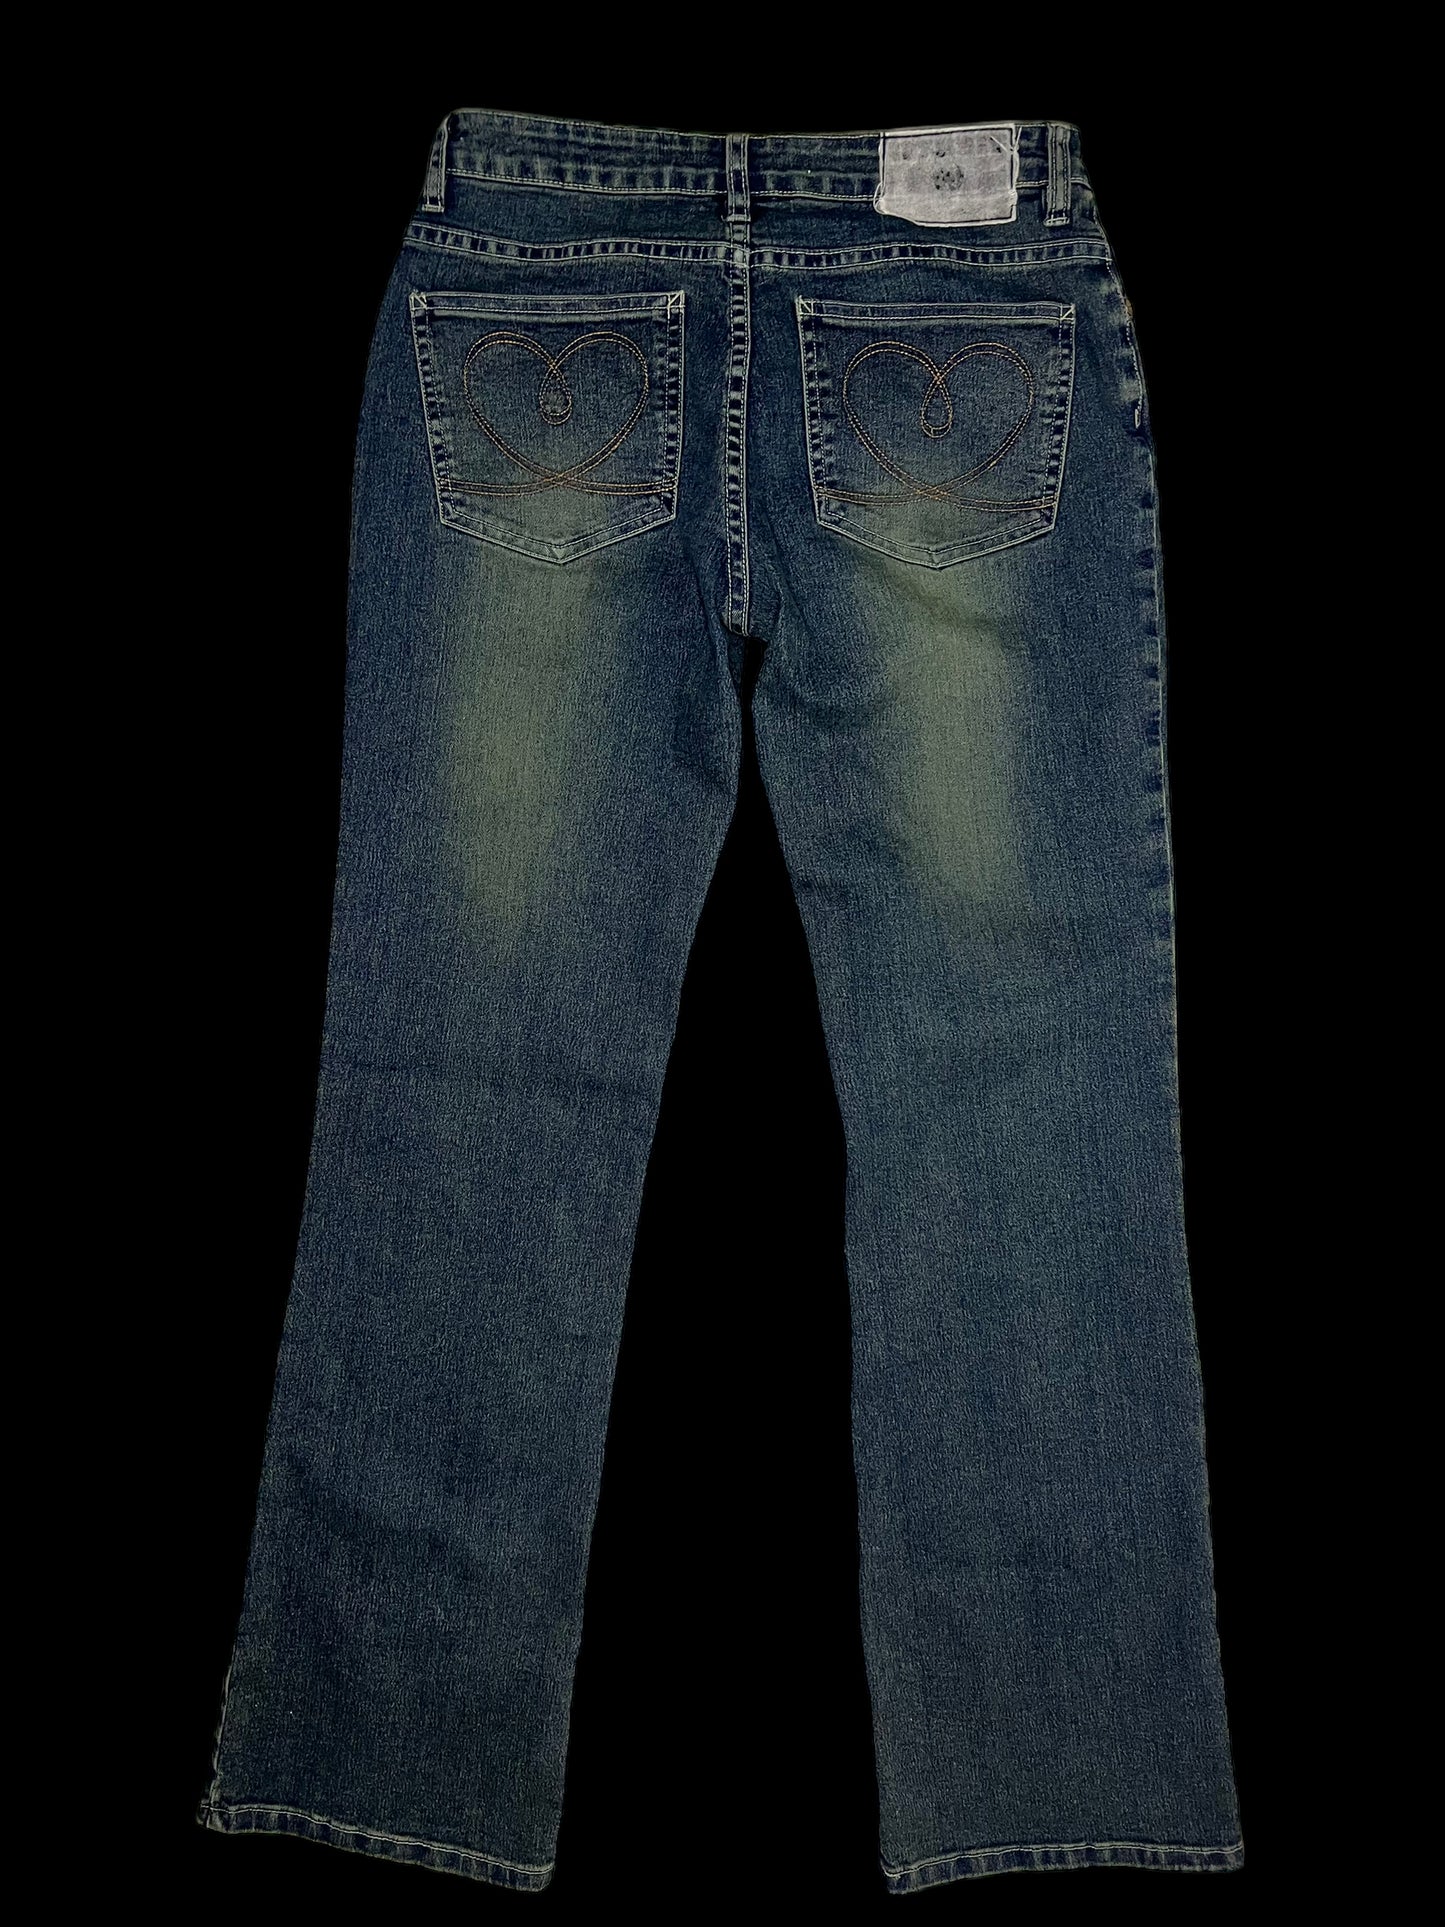 Vintage 2000s jeans